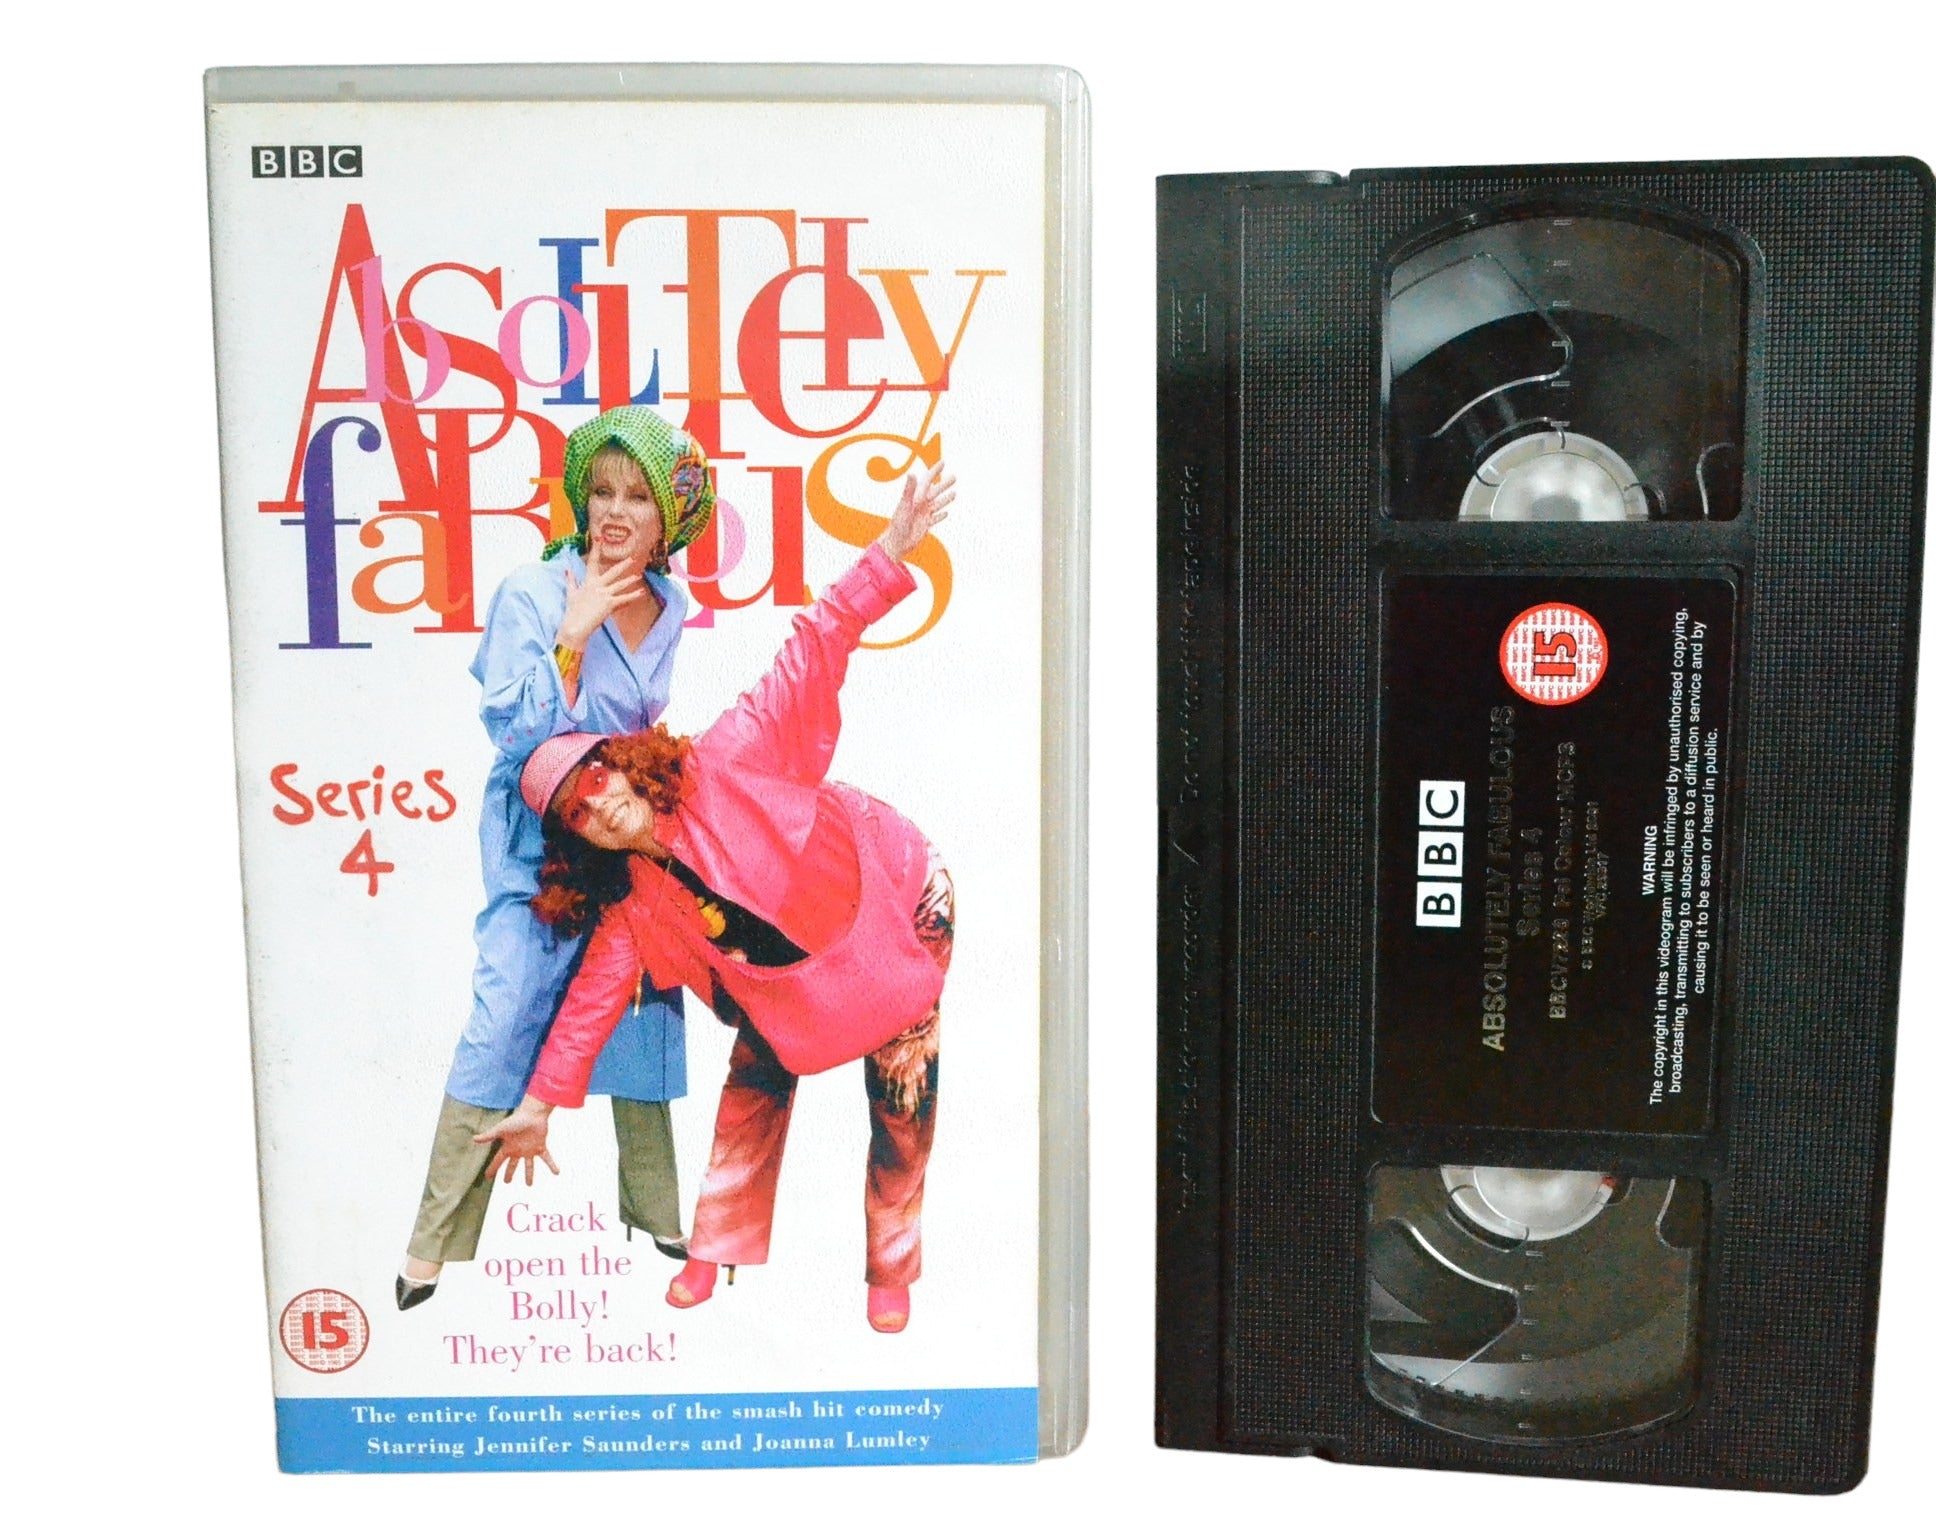 Absolutely Fabulous : Series 4 - Jennifer Saunders - BBC Video - BBCV7228 - Comedy - Pal - VHS-